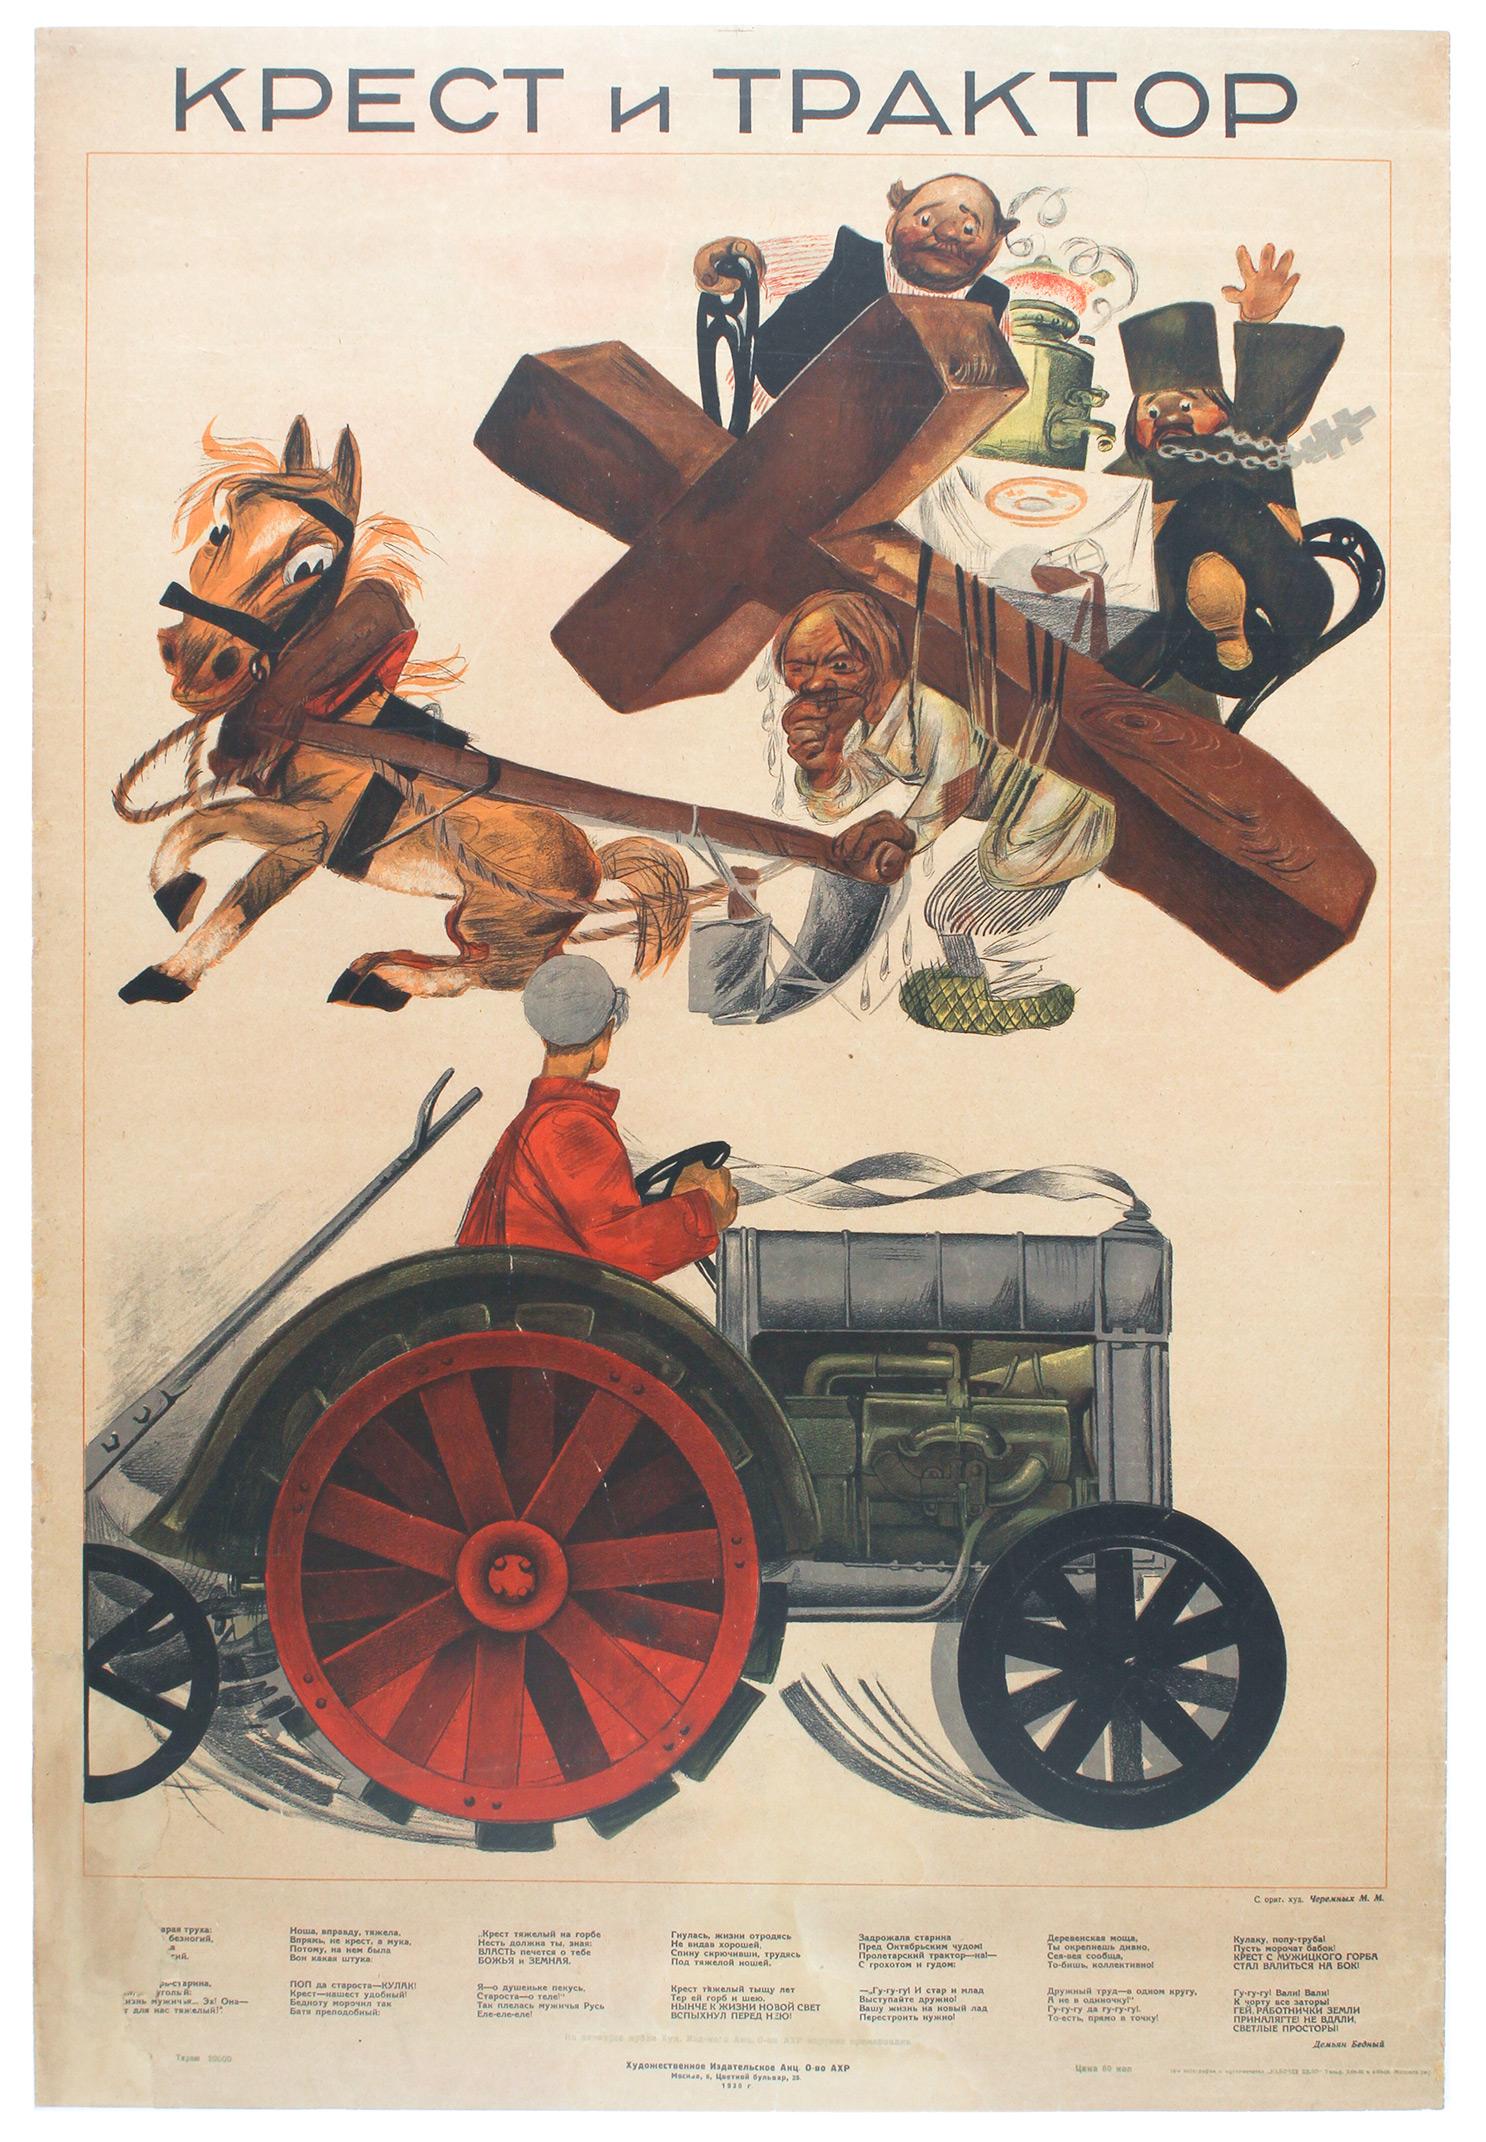 Mikhail Cheremnykh Print - Original Vintage Anti Religion Soviet Propaganda Poster Cross And Tractor Farmer